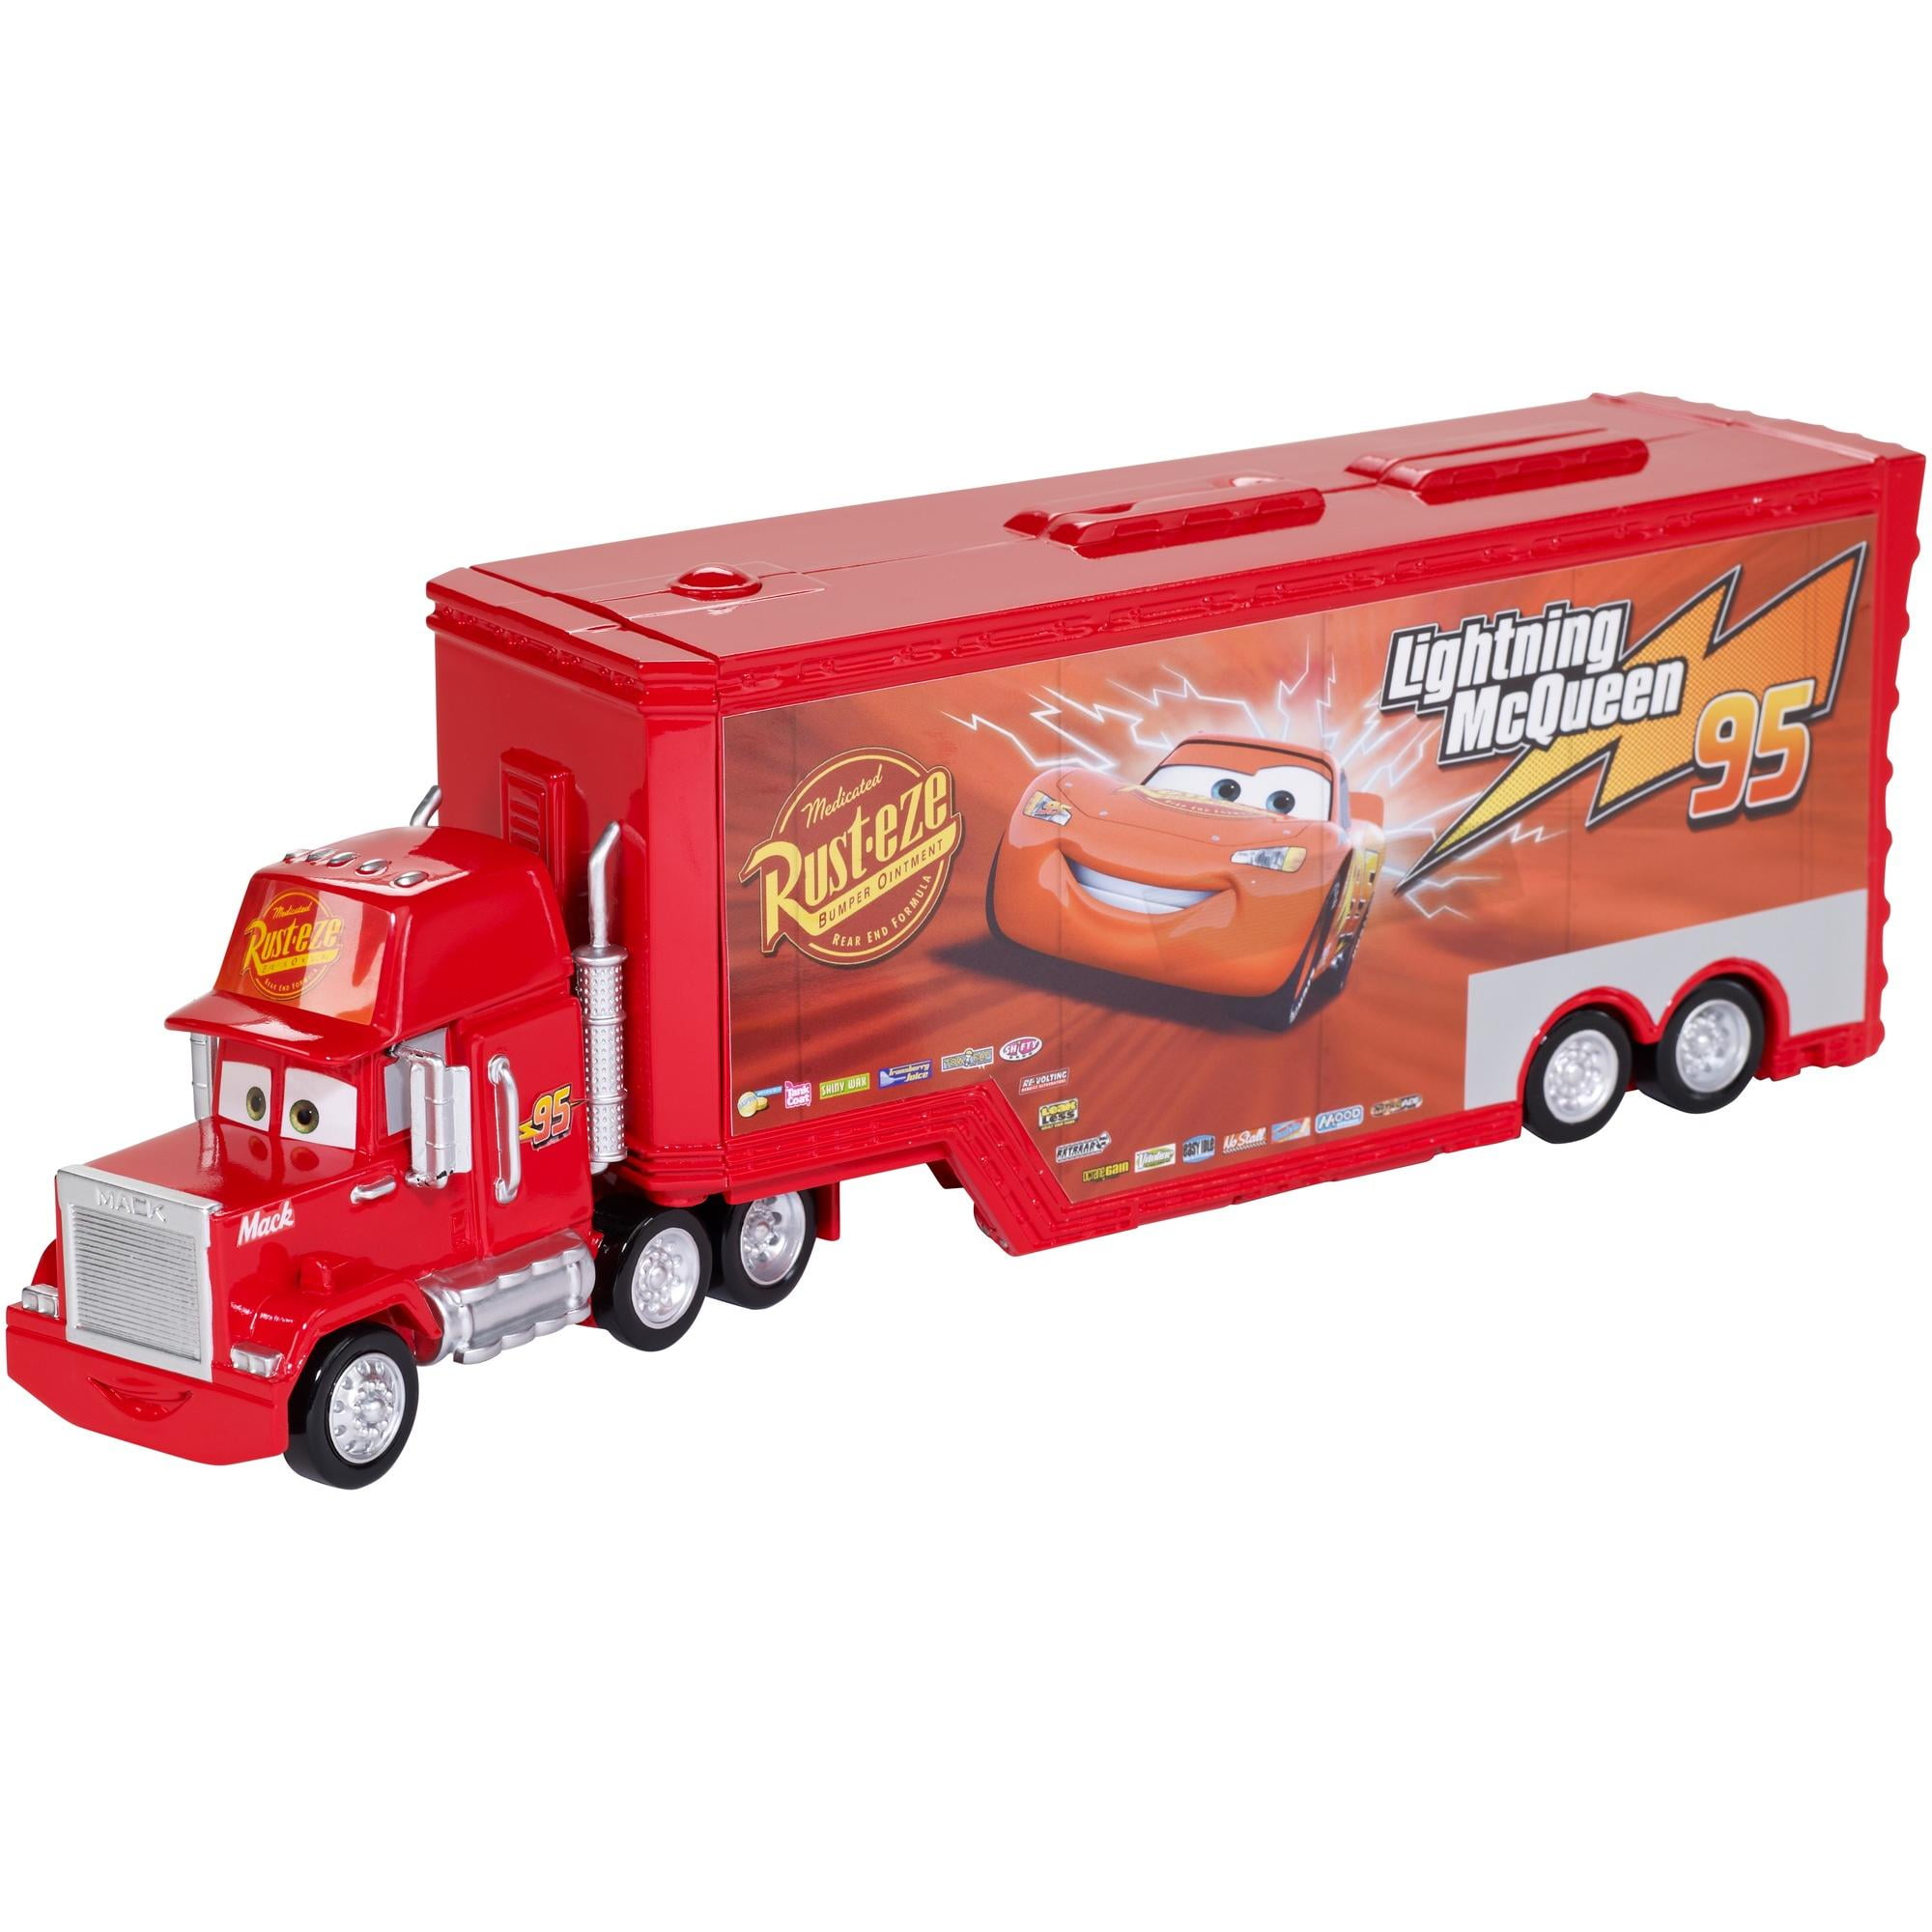 New Toy Mattel Car Disney Cars Lightning McQueen Transforming Mack Truck Ages 4 